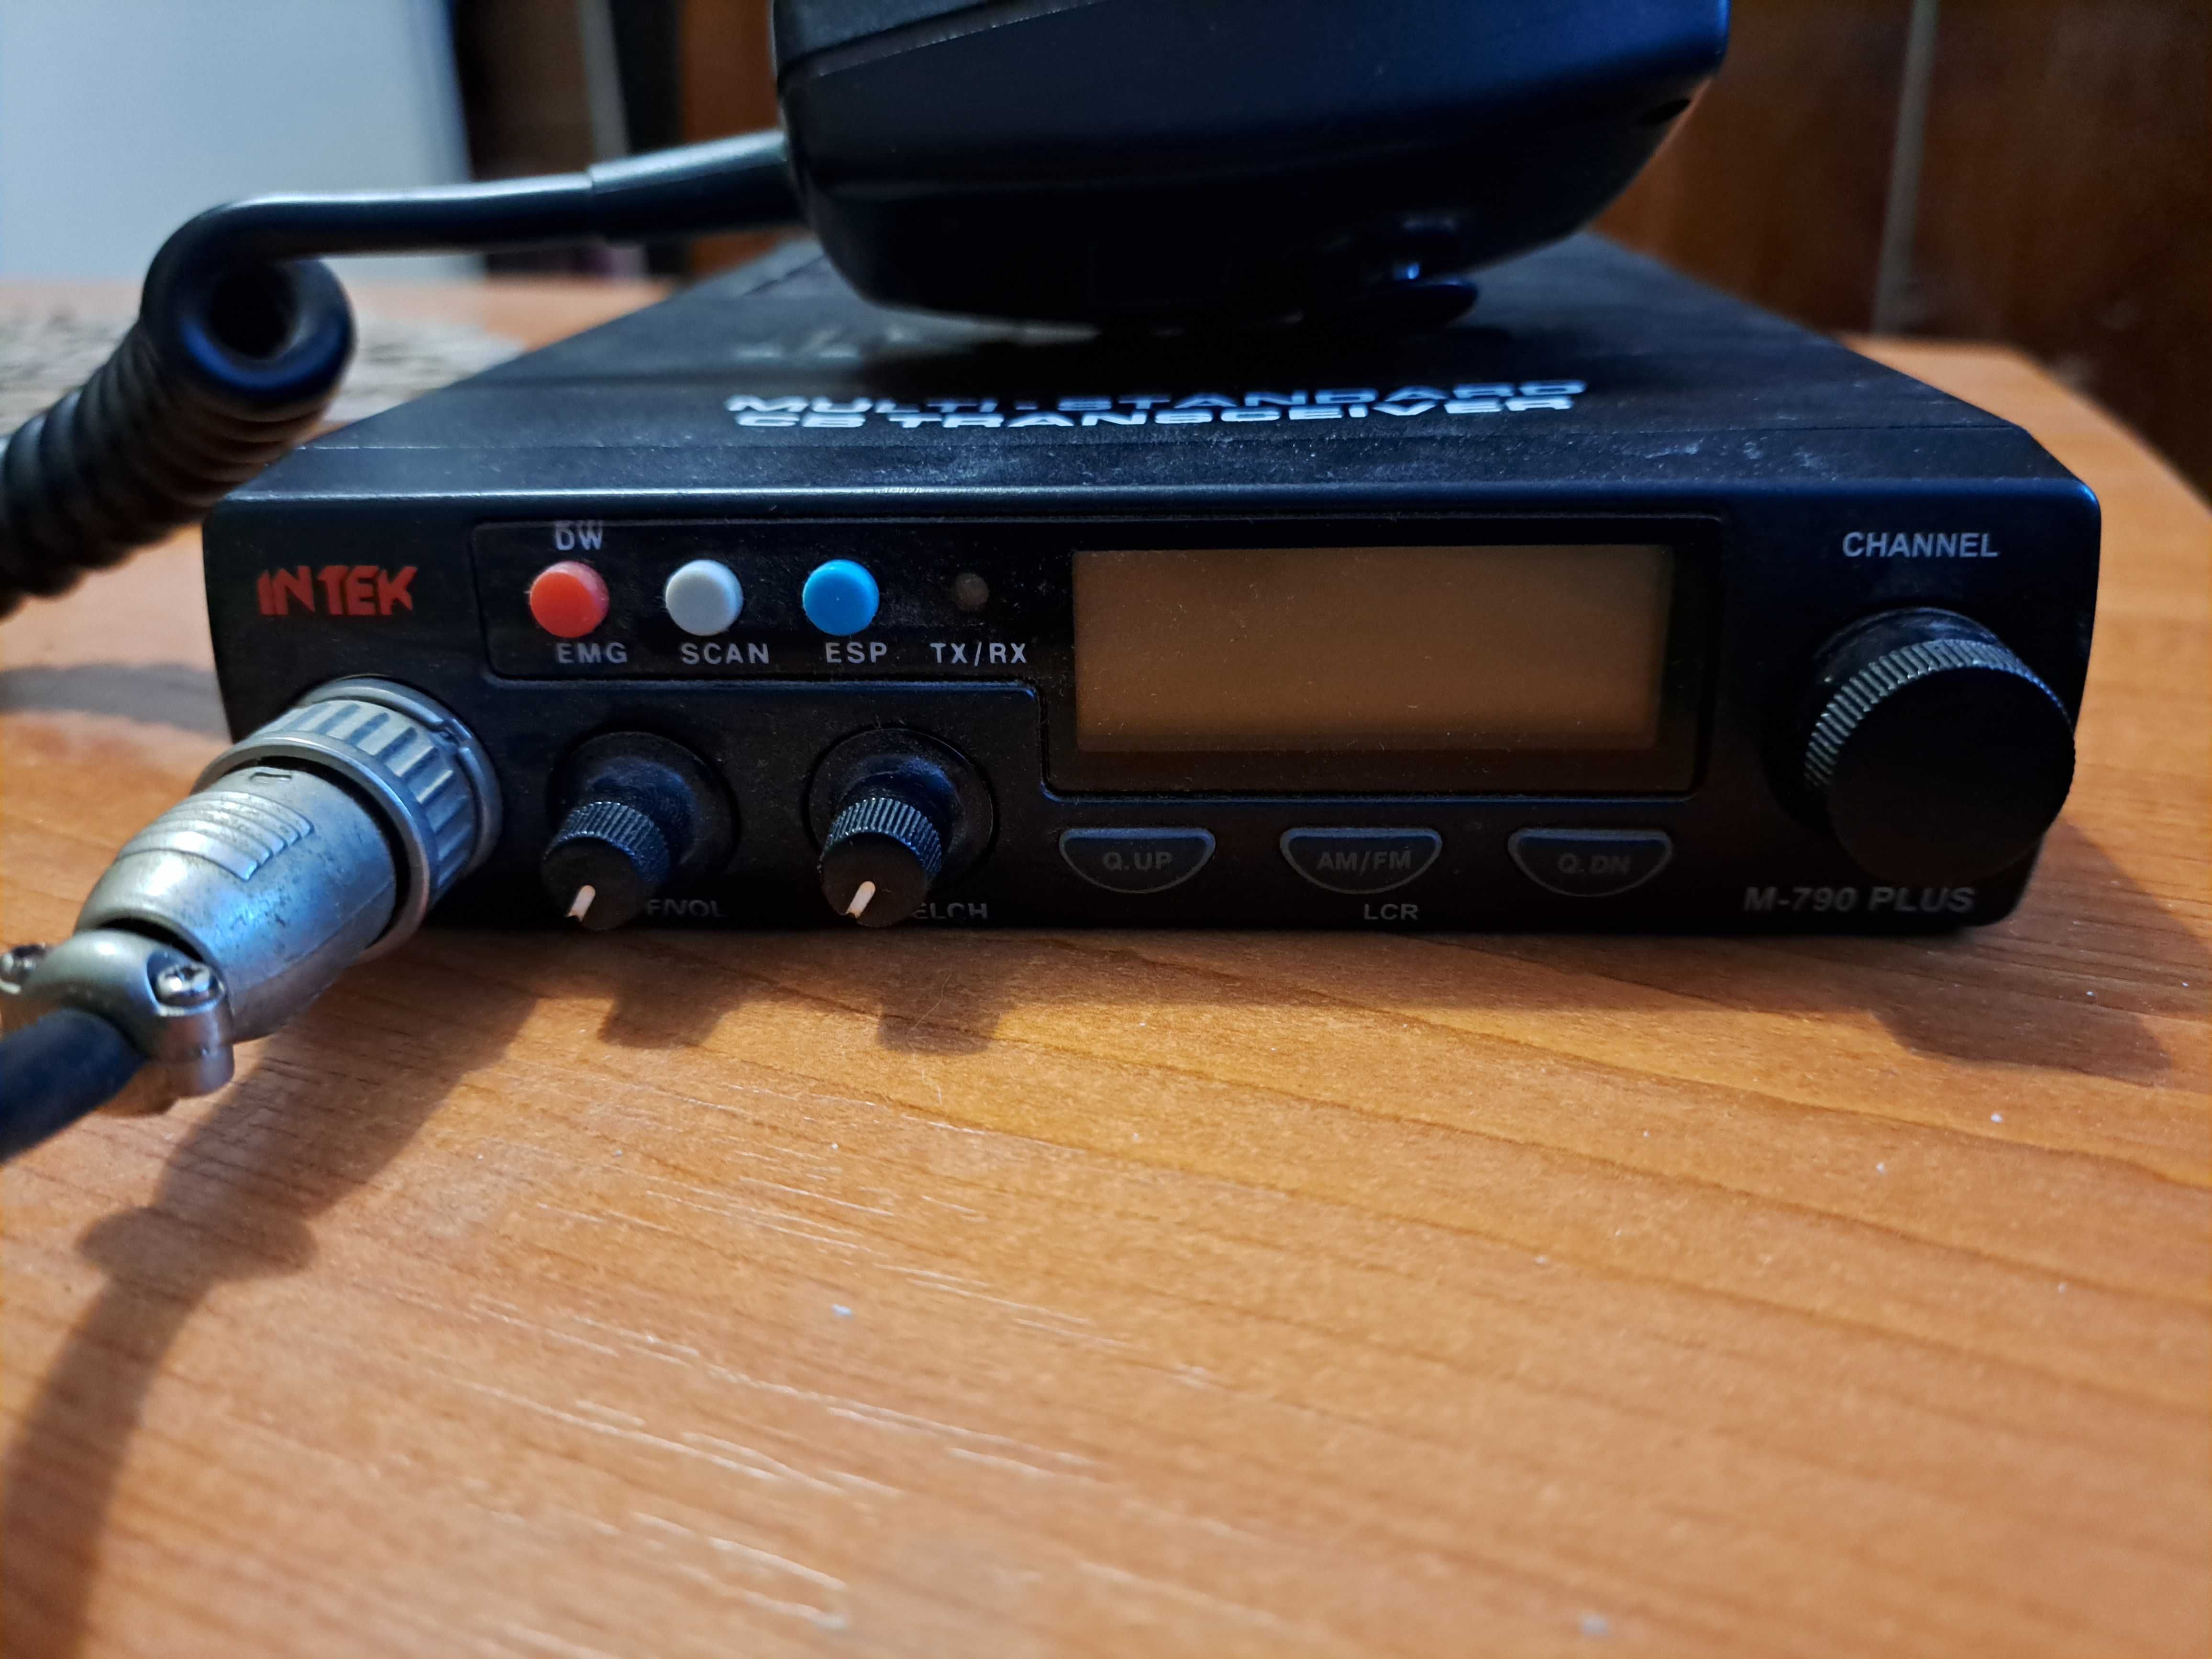 Statie radio INTEK M-790 Plus